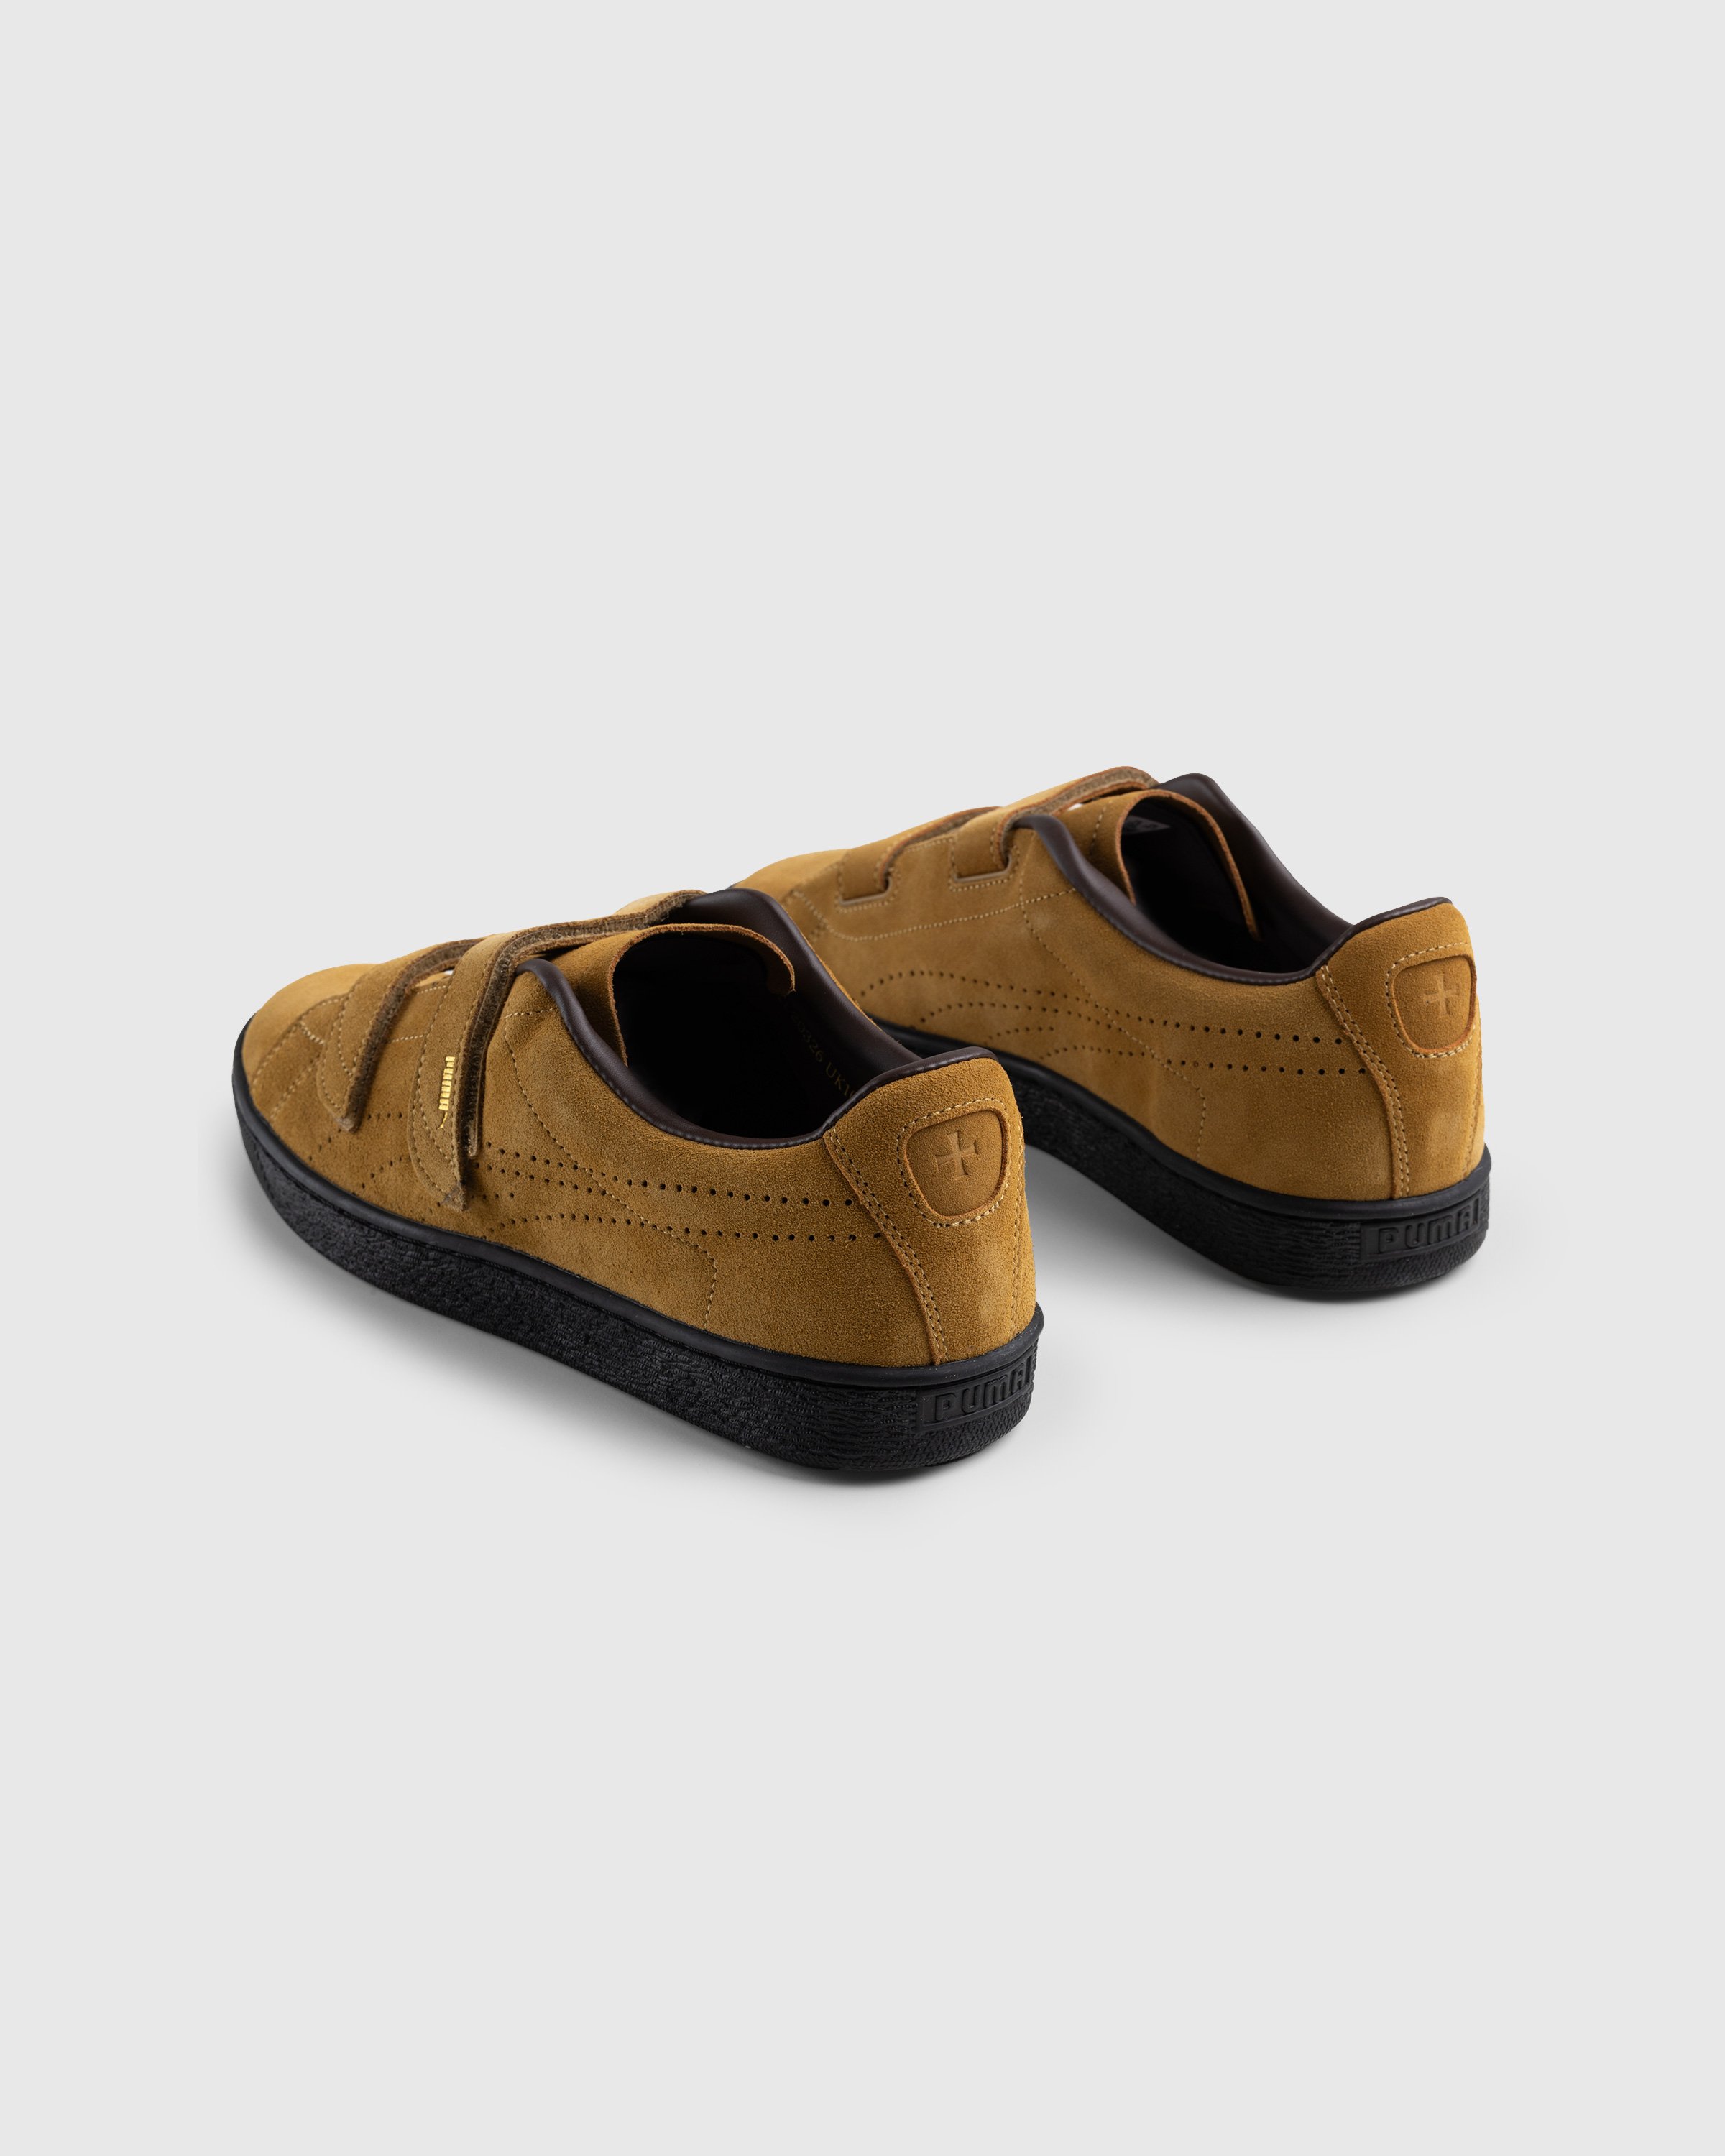 Puma - Suede Classic V NOAH Brown/Black - Footwear - Multi - Image 4